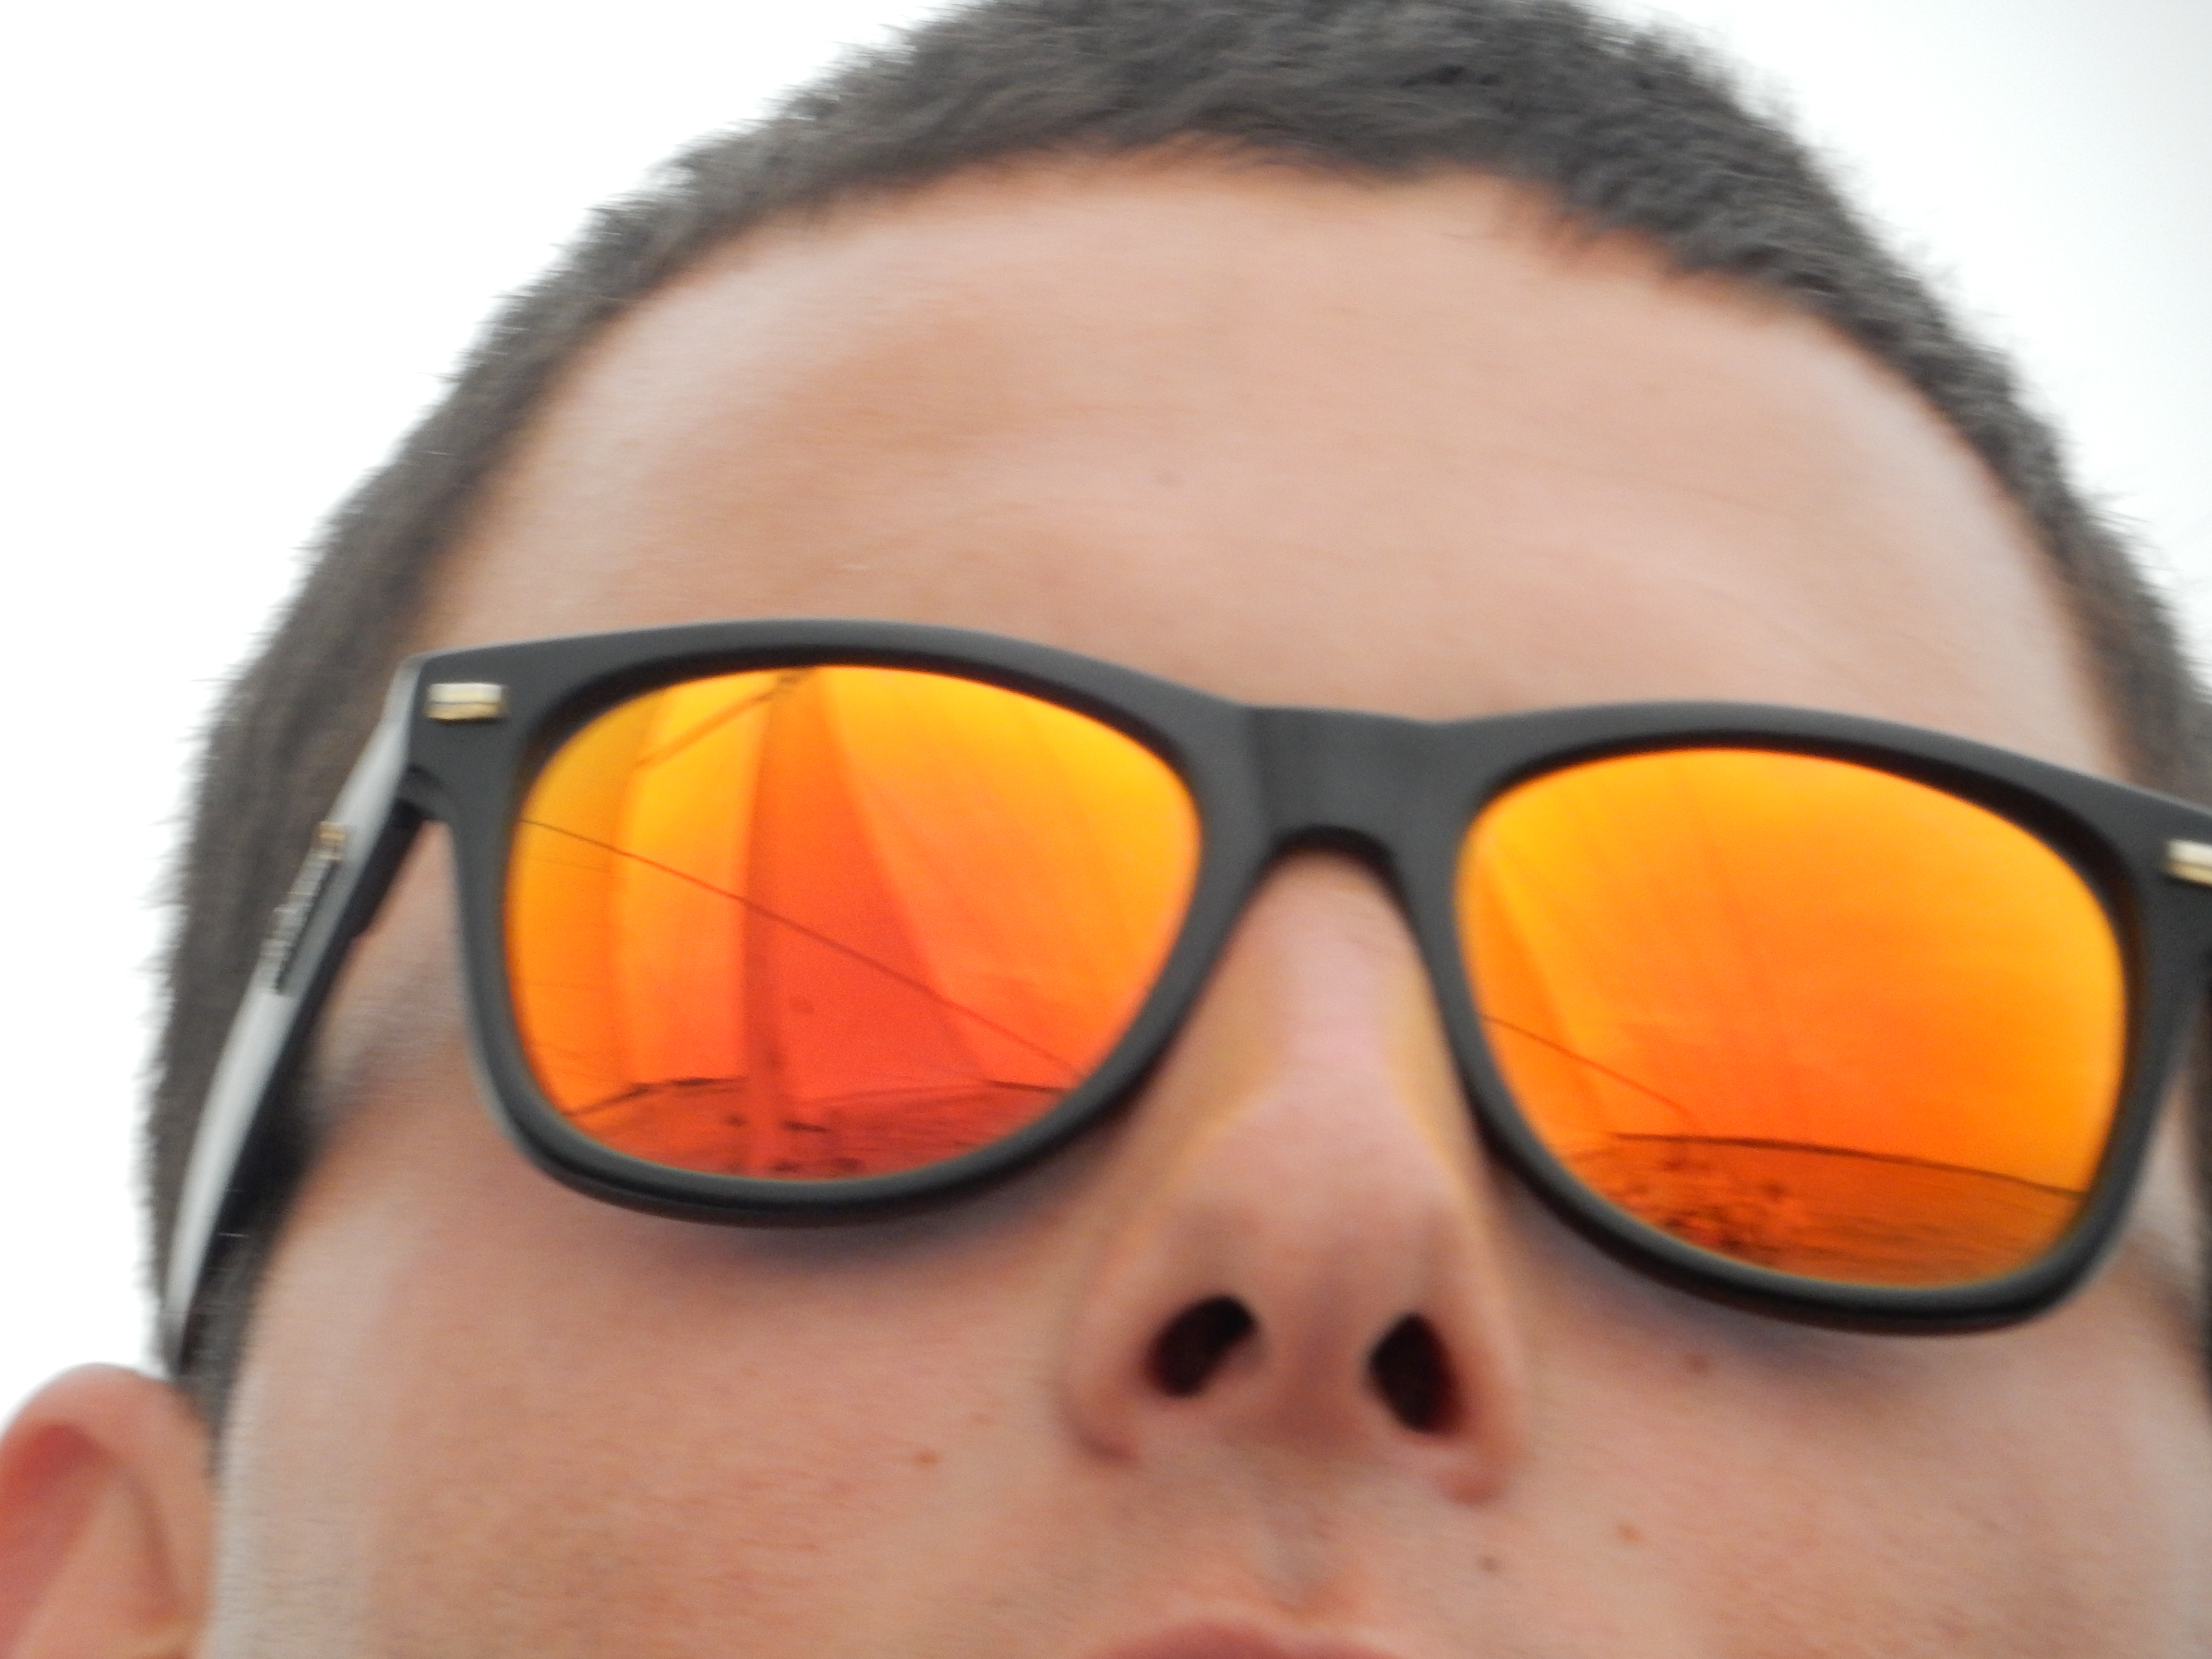 Reflections of the schooner in a man's orange sunglasses